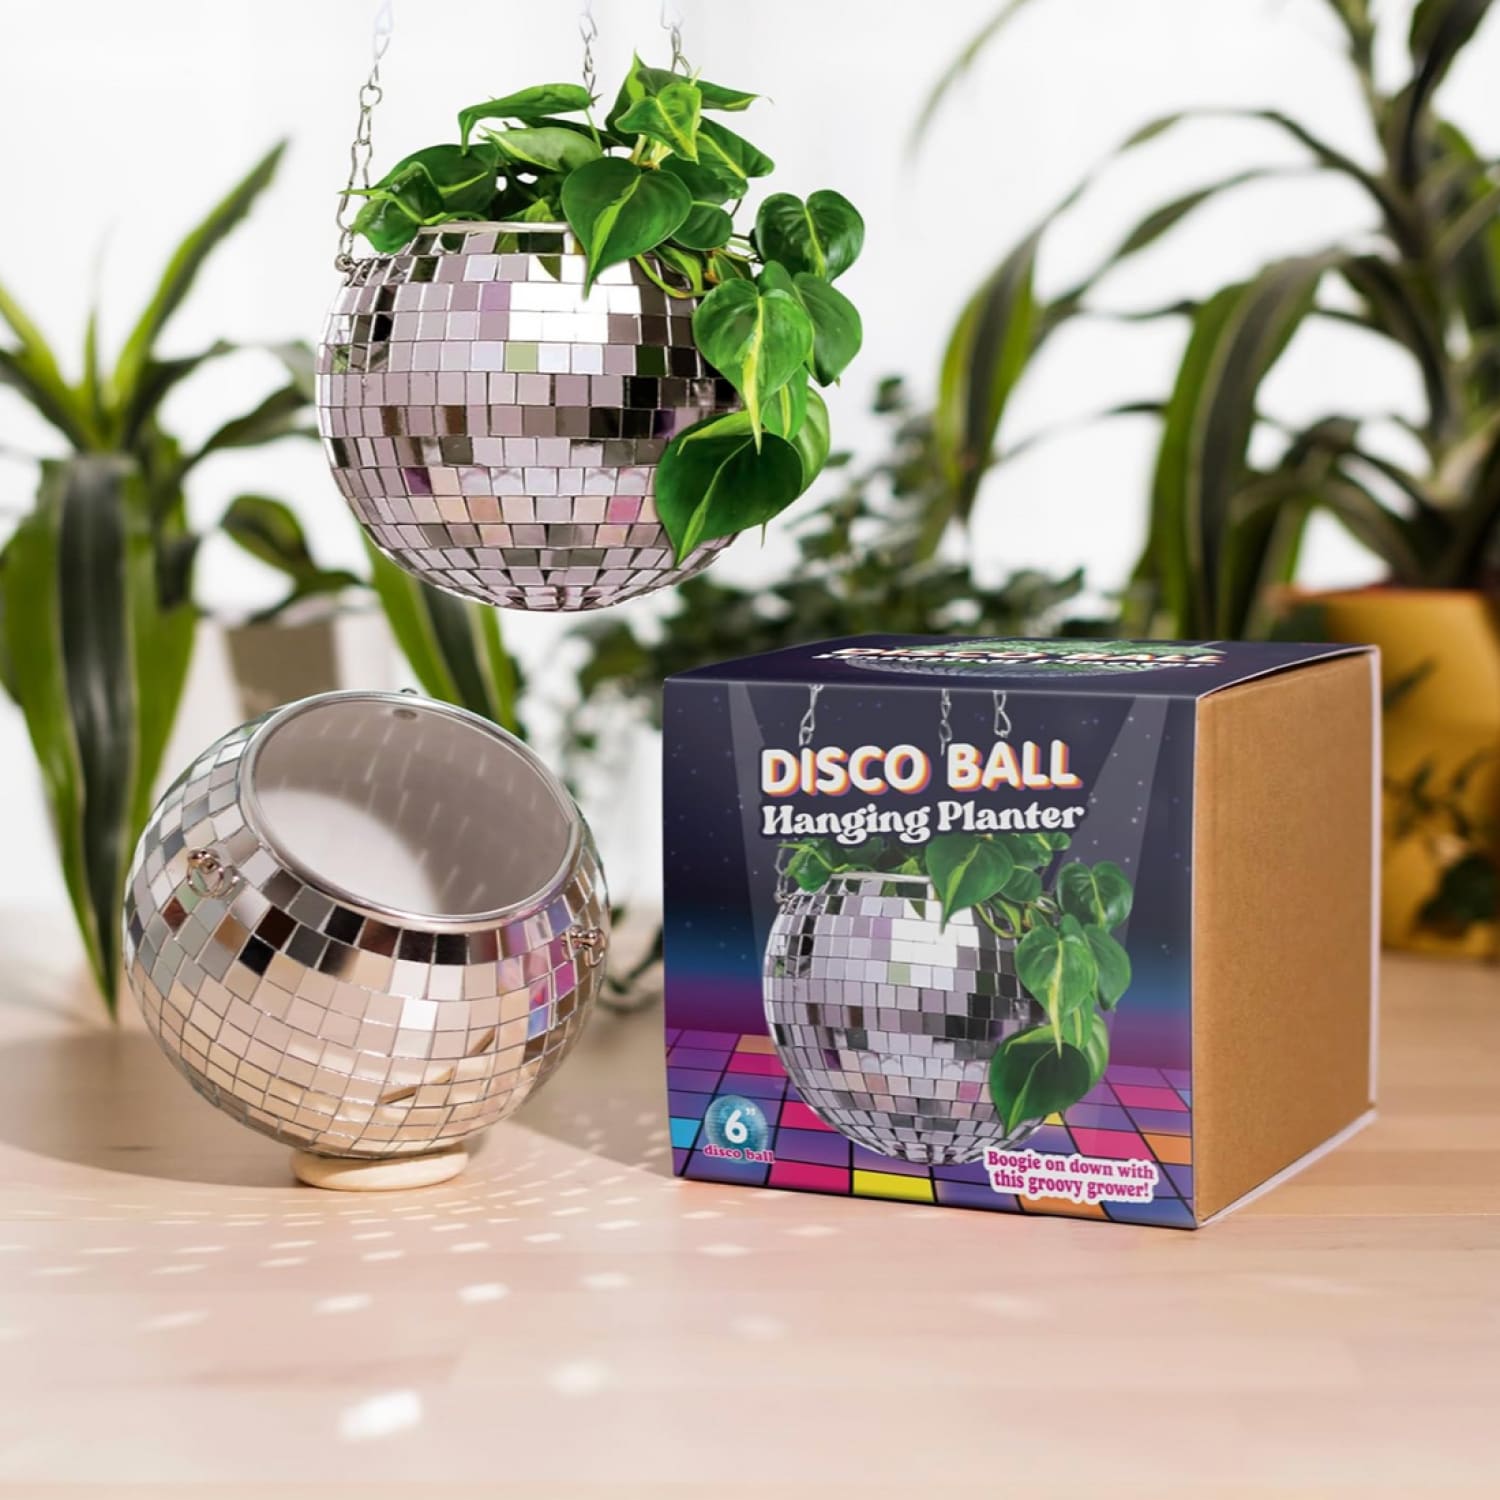 Disco Ball Plant Hanger 6’ Disco Ball - Hanging Planter